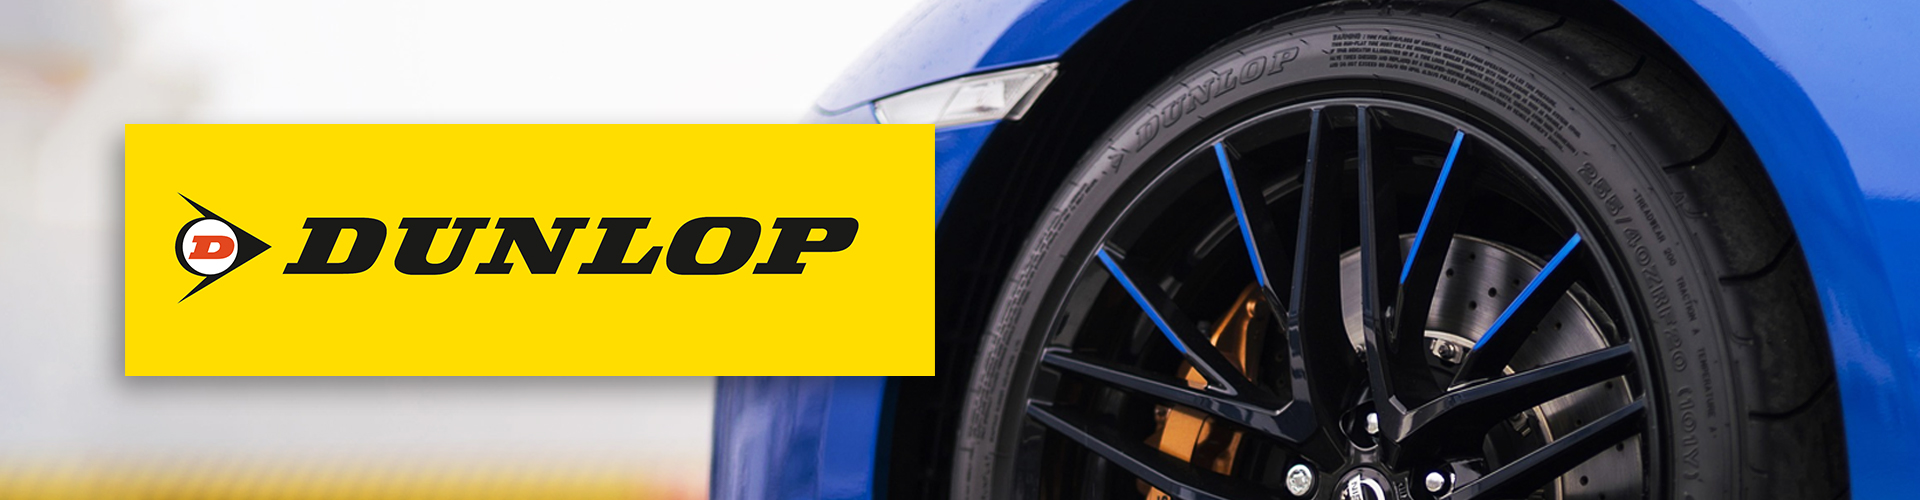 Dunlop - Brands I Malas Tyres